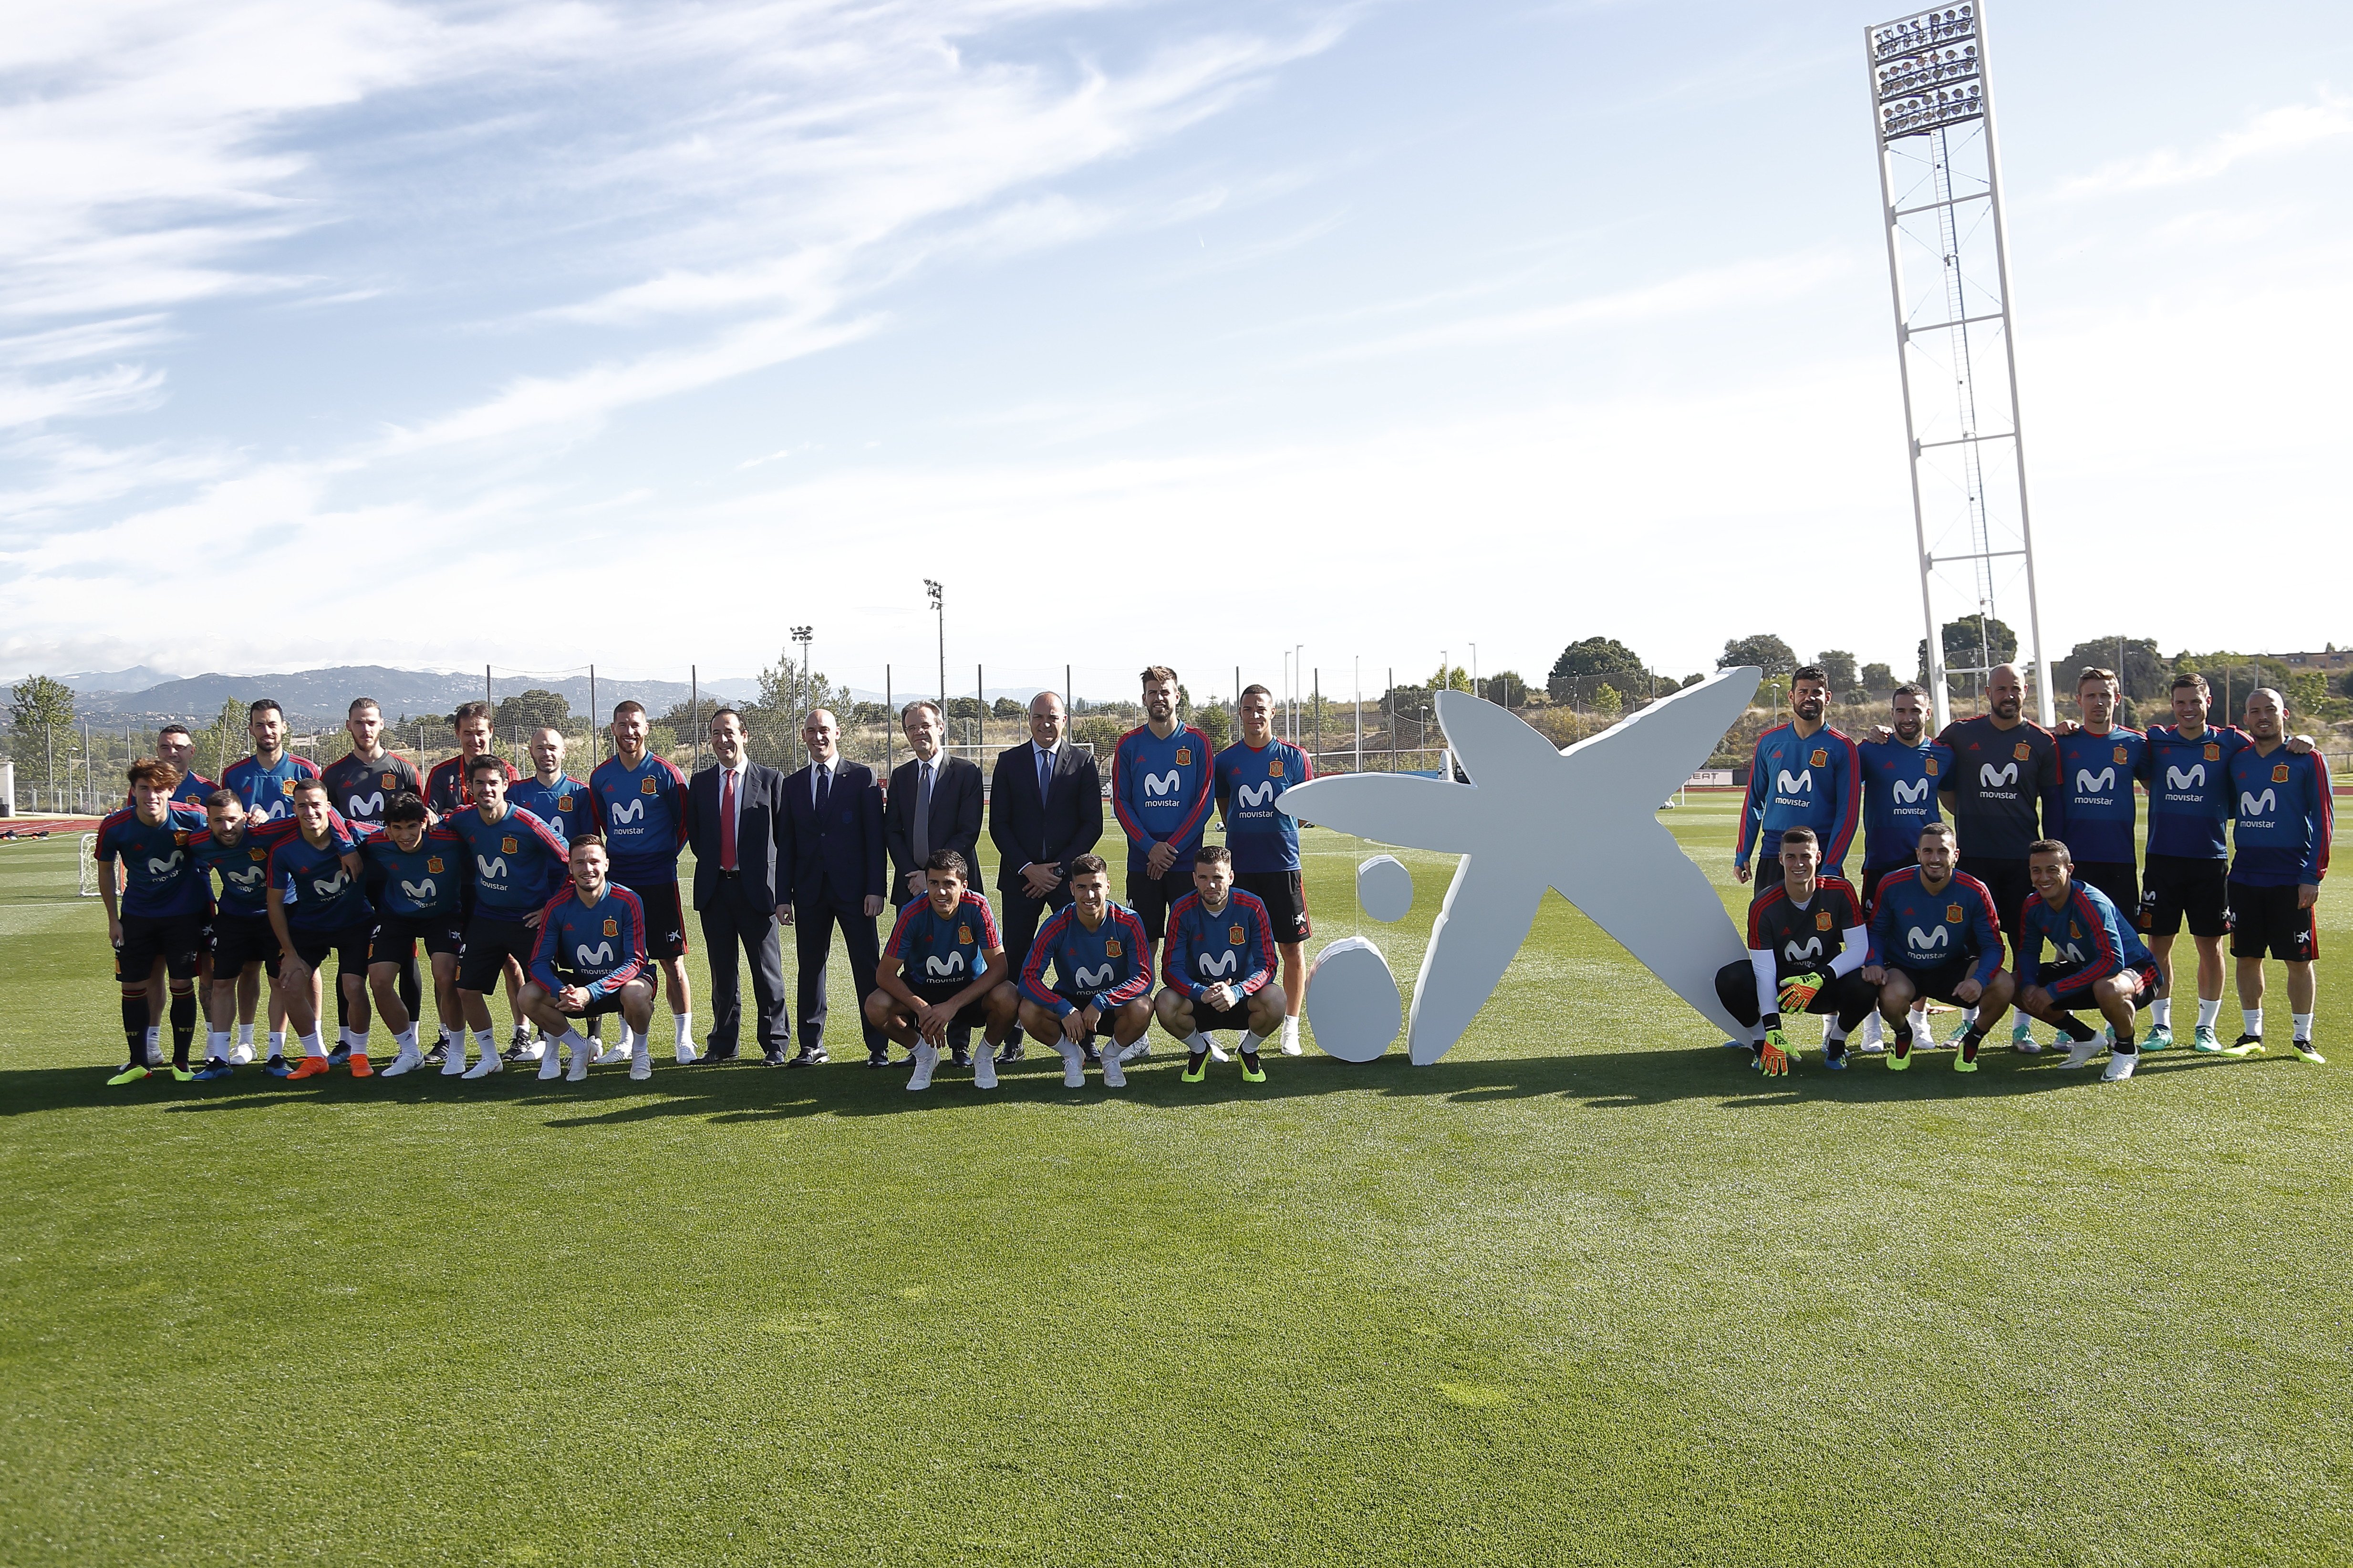 CaixaBank patrocinarà la Selecció Espanyola de futbol fins al 2024